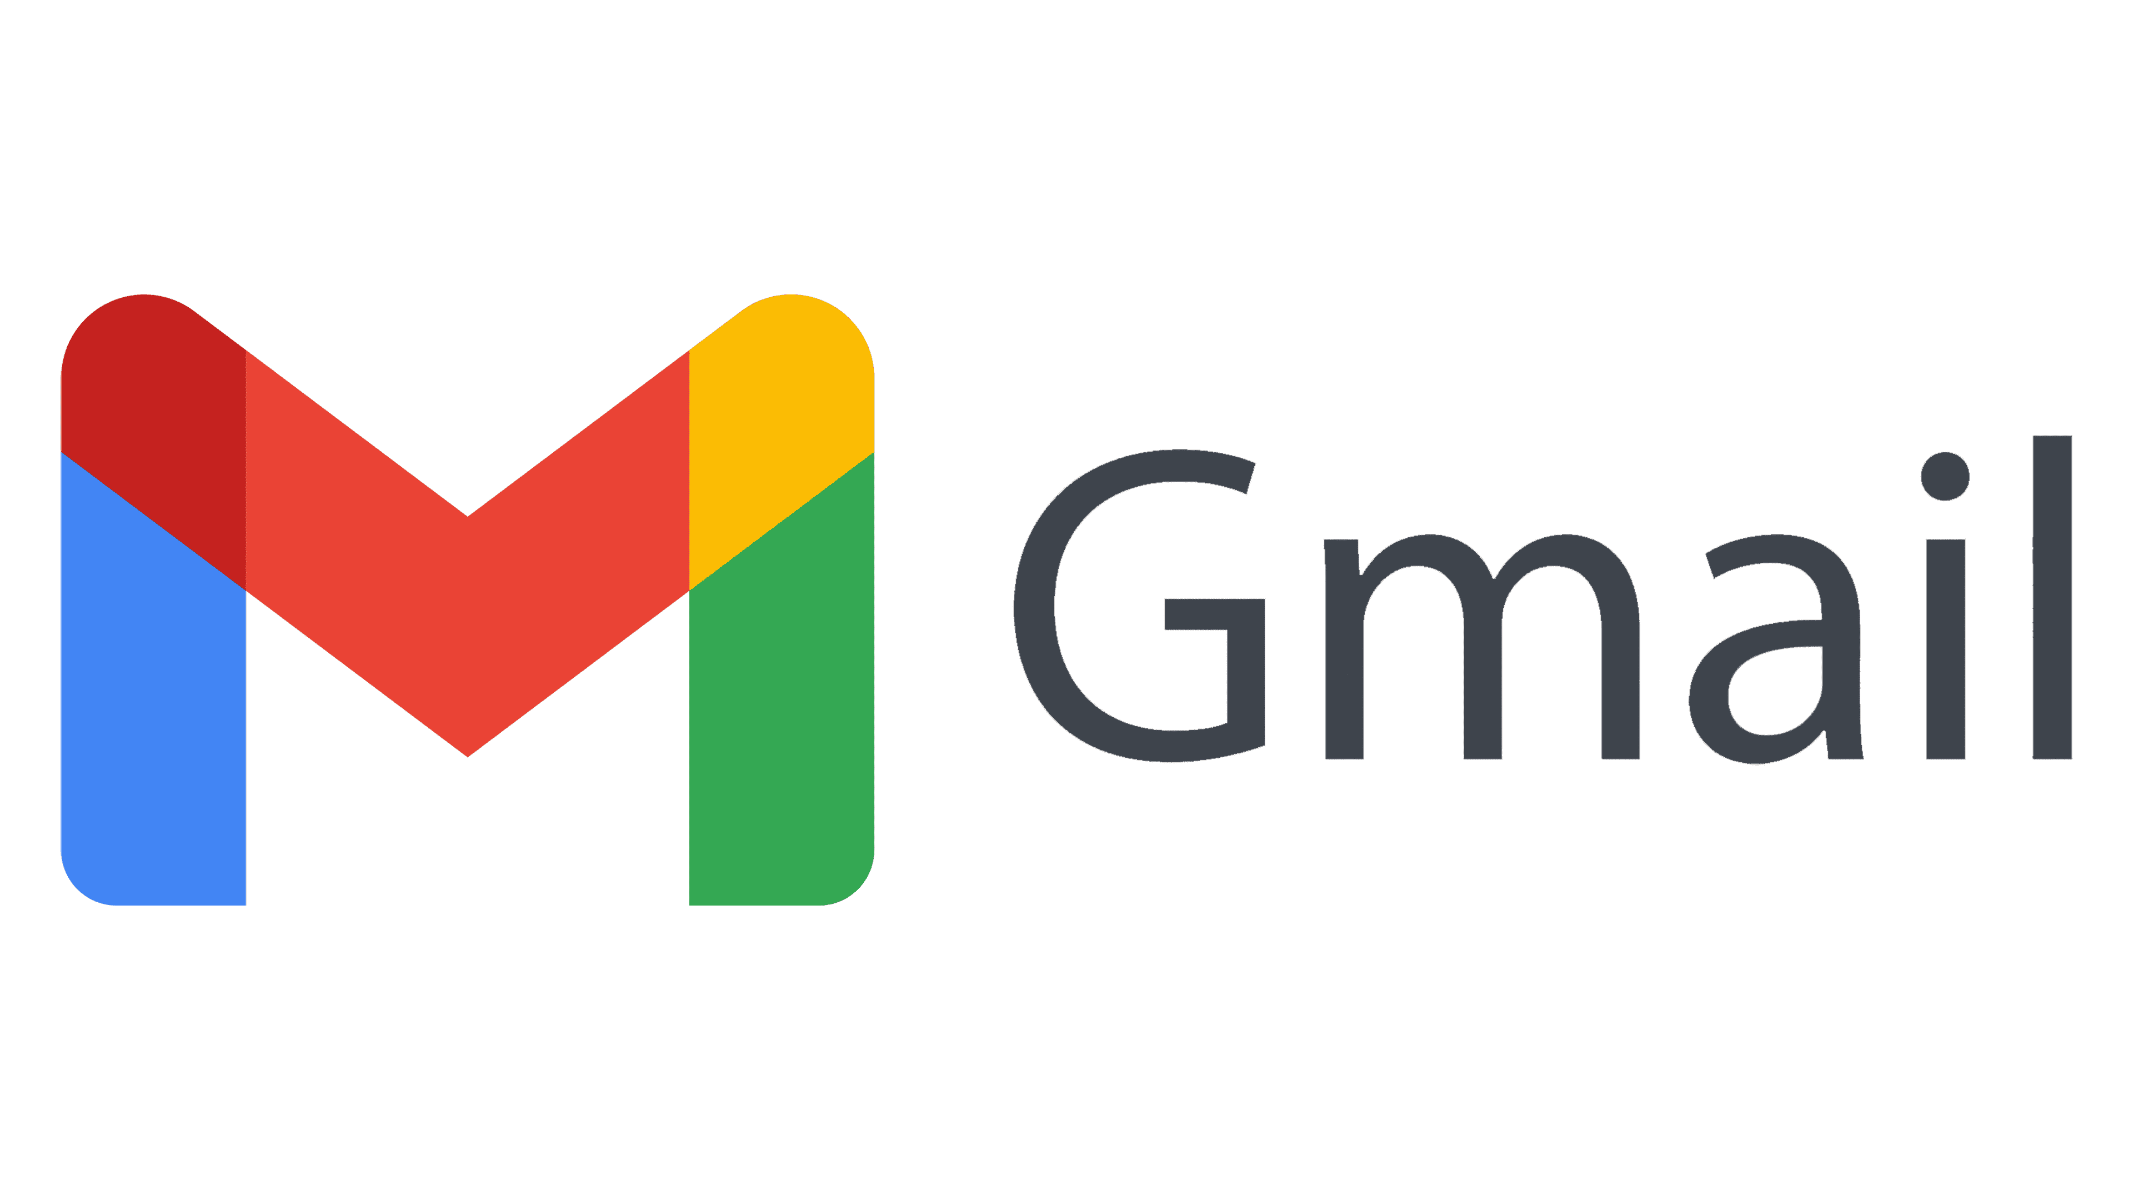 Gmail emblem